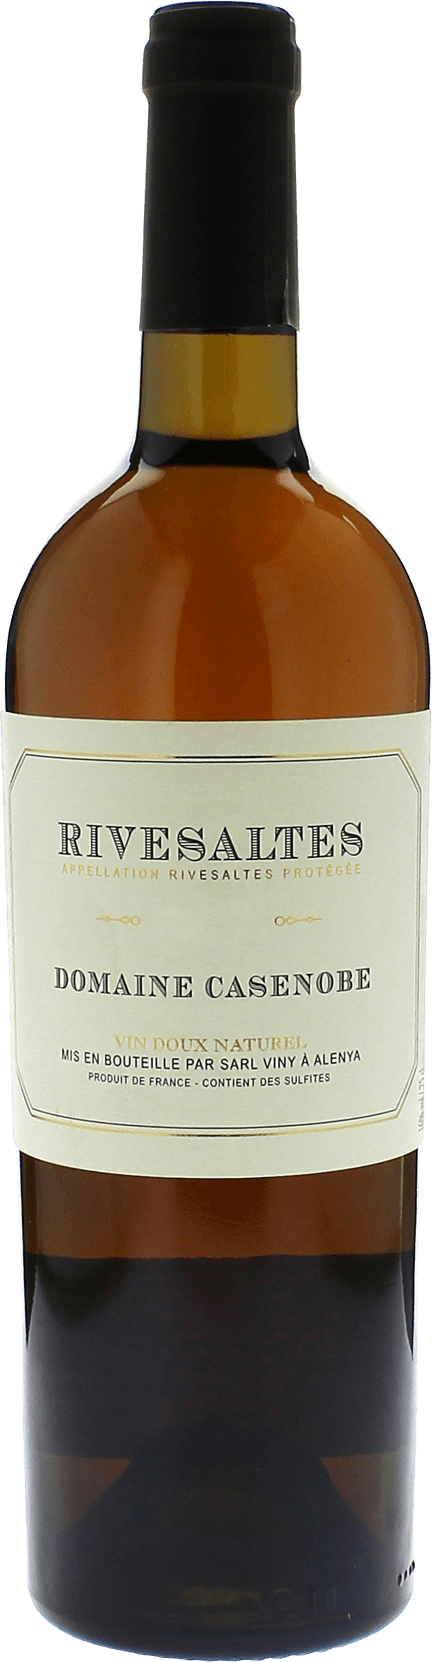 Rivesaltes domaine casenobe 1972 Vin doux naturel Rivesaltes, Vin doux naturel